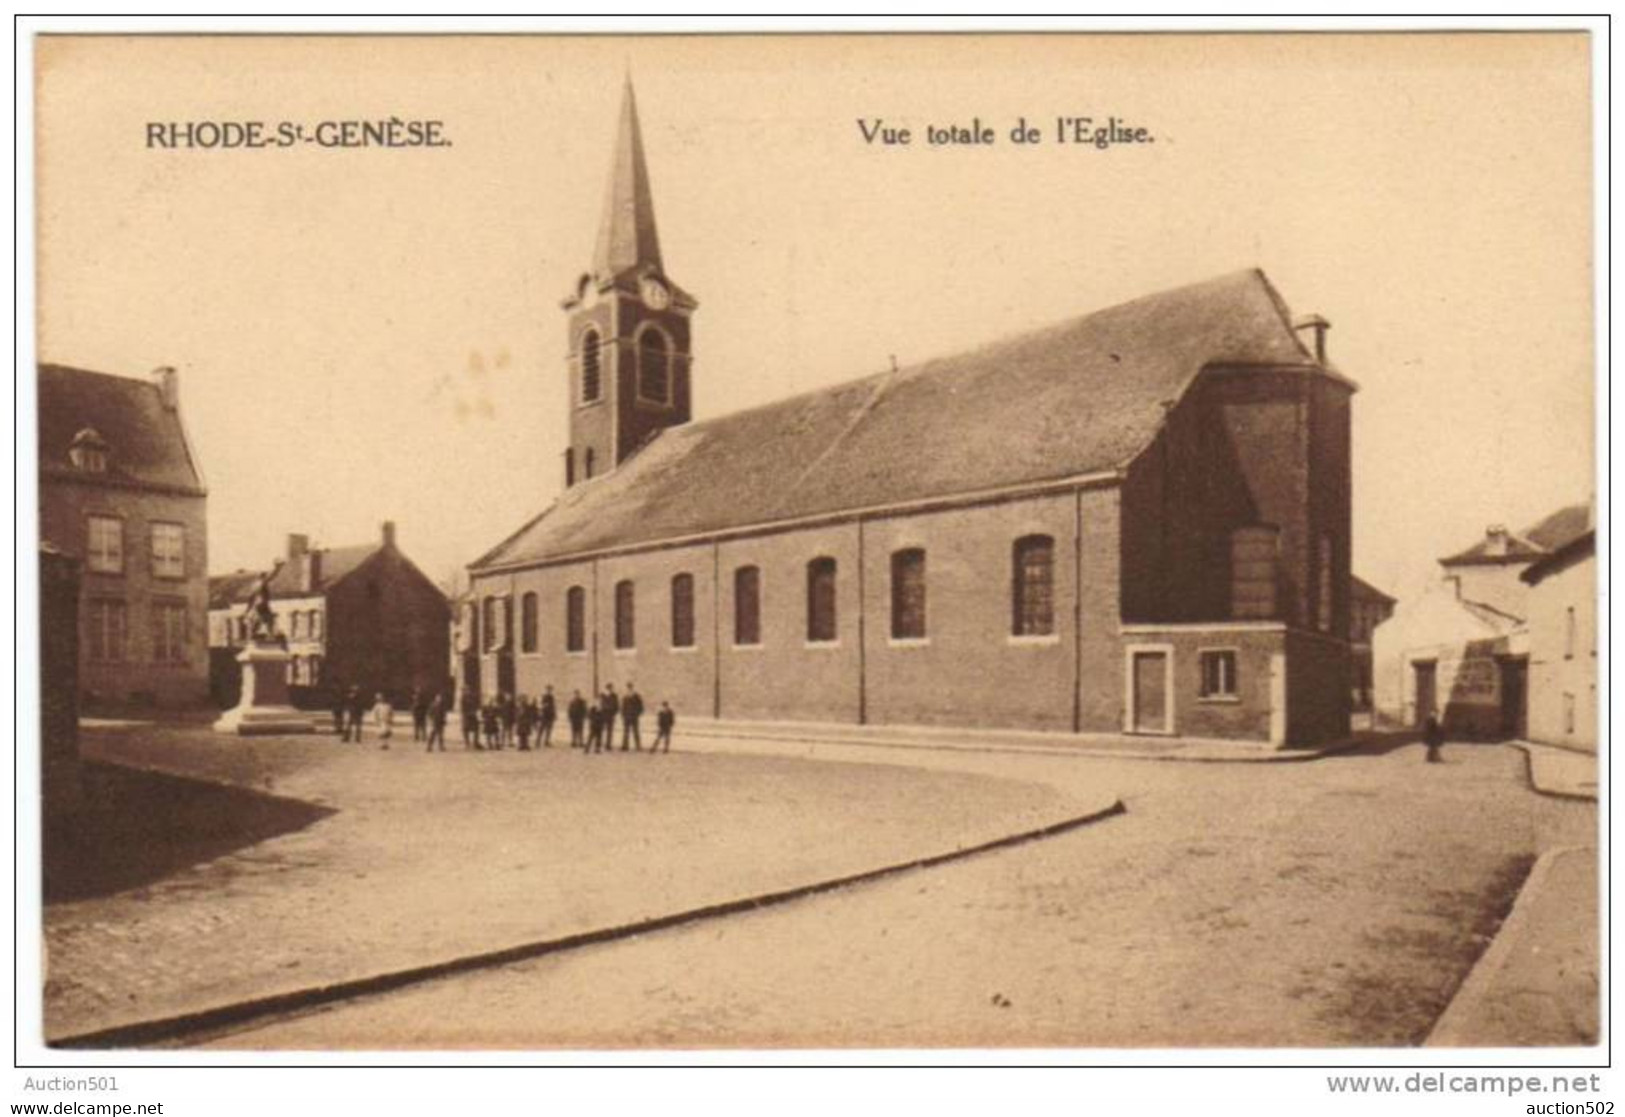 08138g RHODE-ST-GENESE  - L'Eglise - Rhode-St-Genèse - St-Genesius-Rode